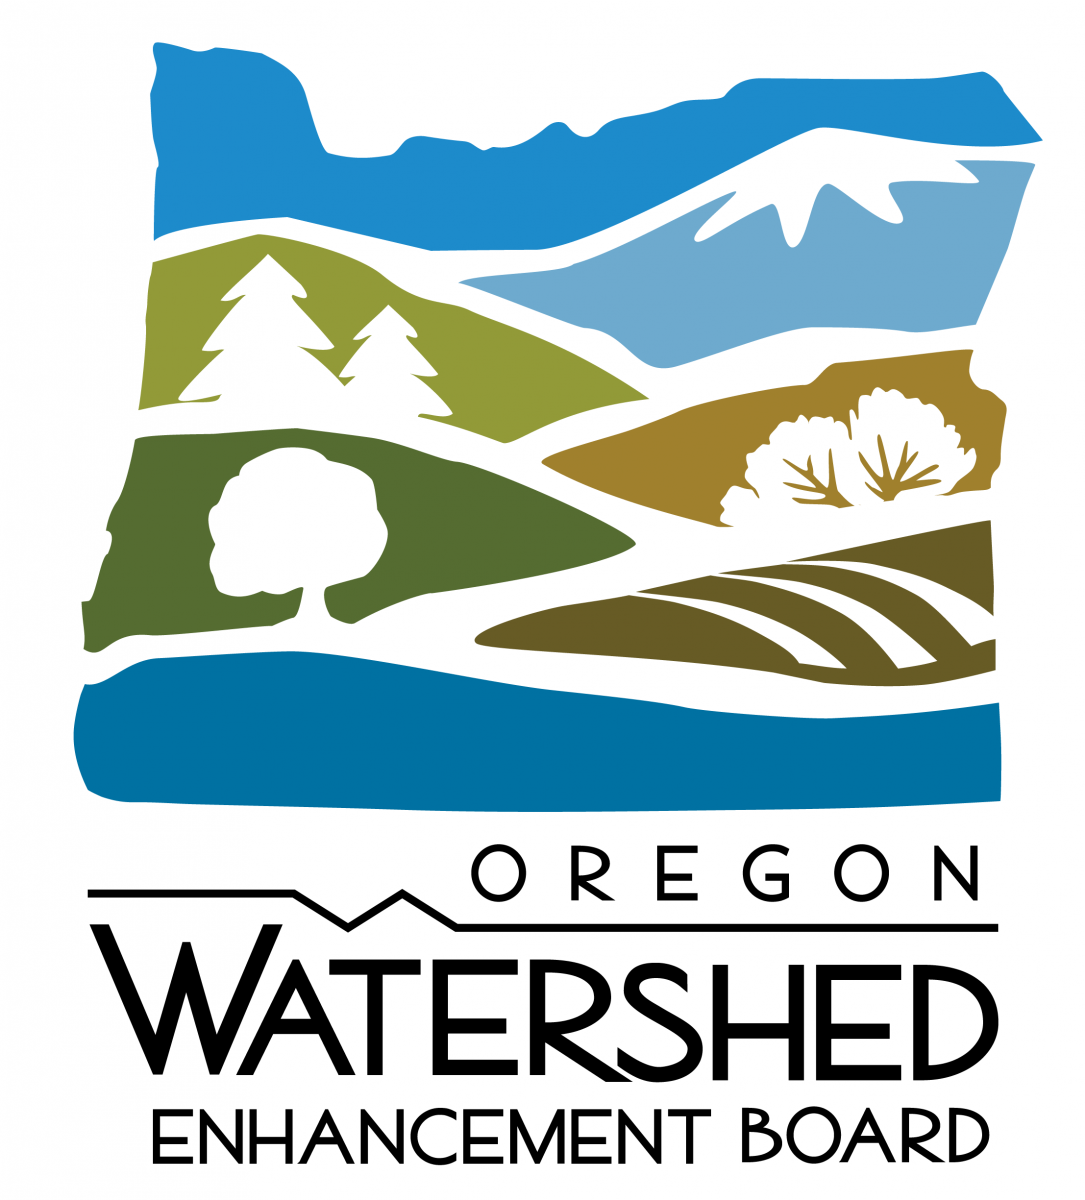 Oregon Watershed & Enhancement Board